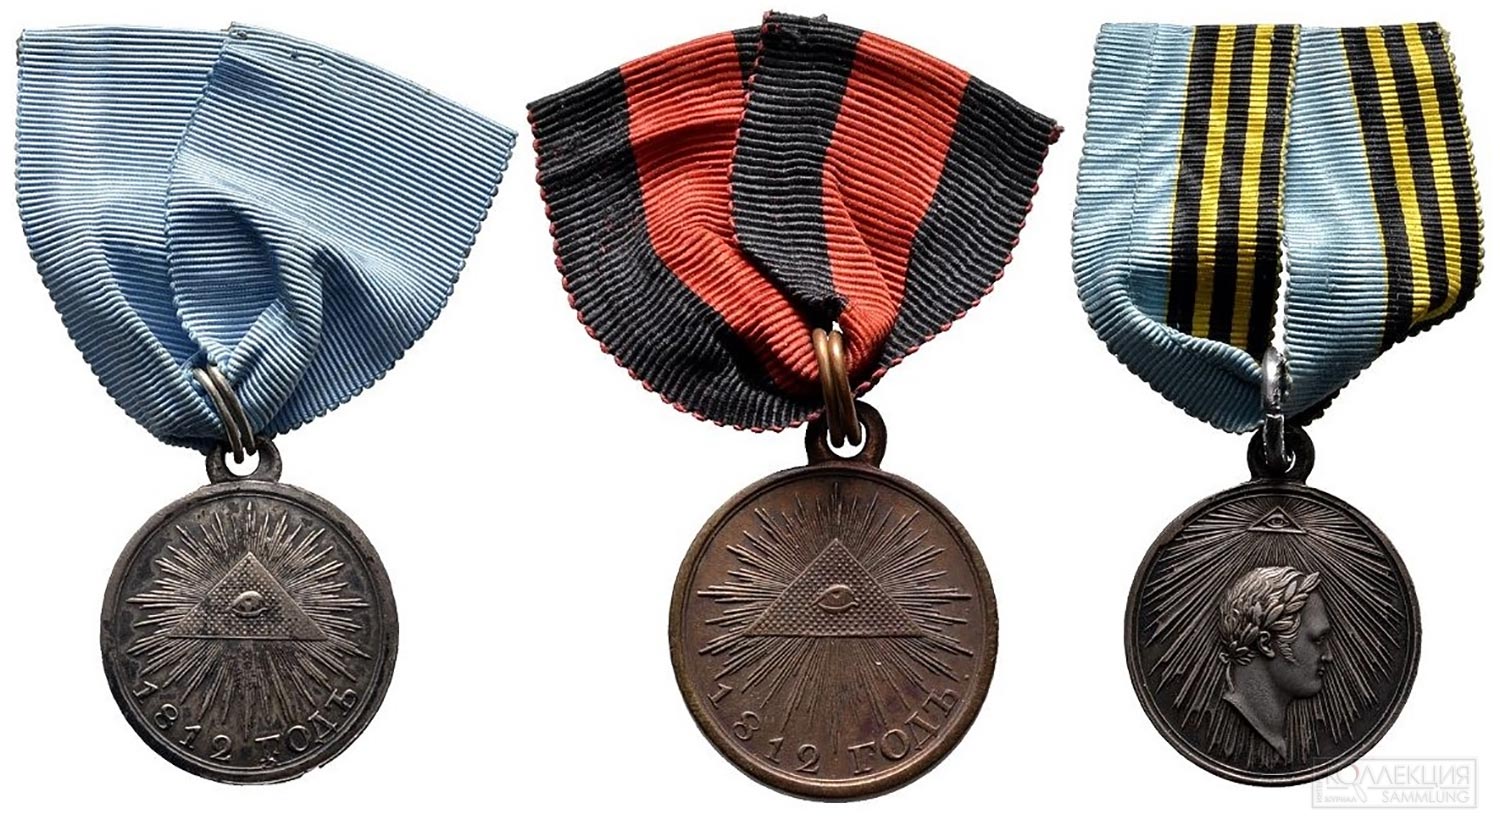 Медали, представленные на портрете статского советника Александра Ивановича Мессинга